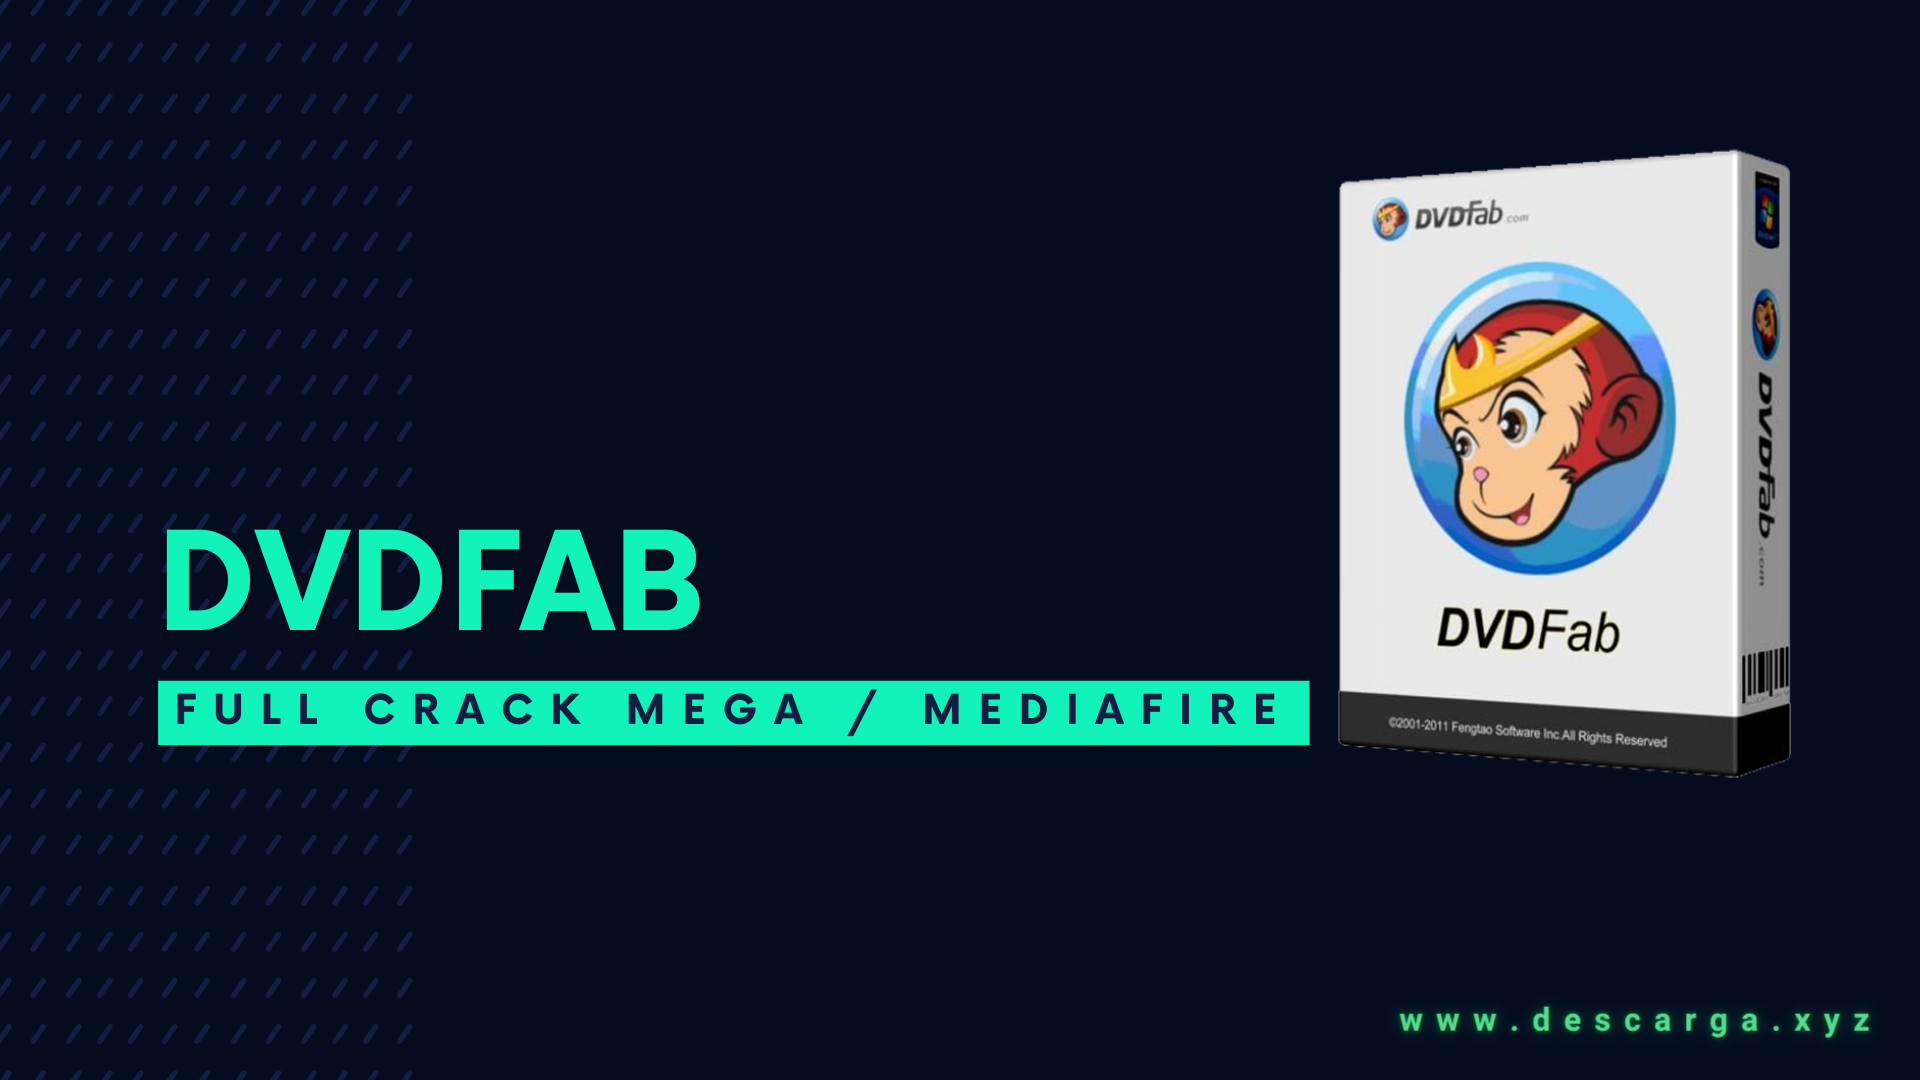 DVDFab Final Full Crack descarga gratis MEGA